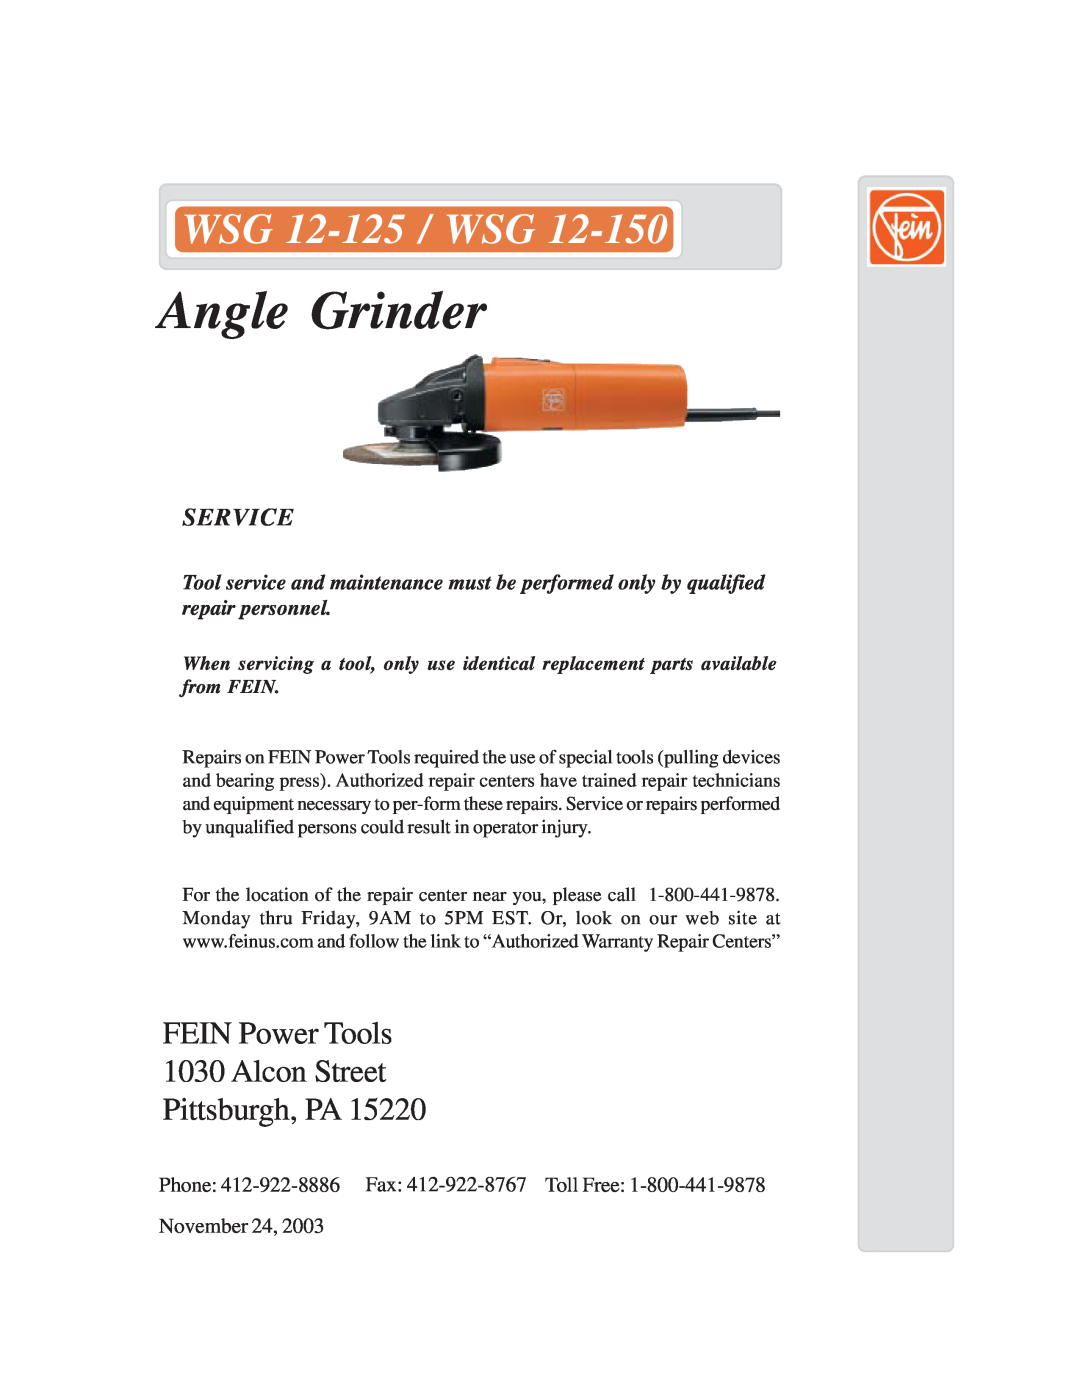 FEIN Power Tools WSG 12-150 warranty Angle Grinder, WSG 12-125 / WSG, FEIN Power Tools 1030 Alcon Street Pittsburgh, PA 